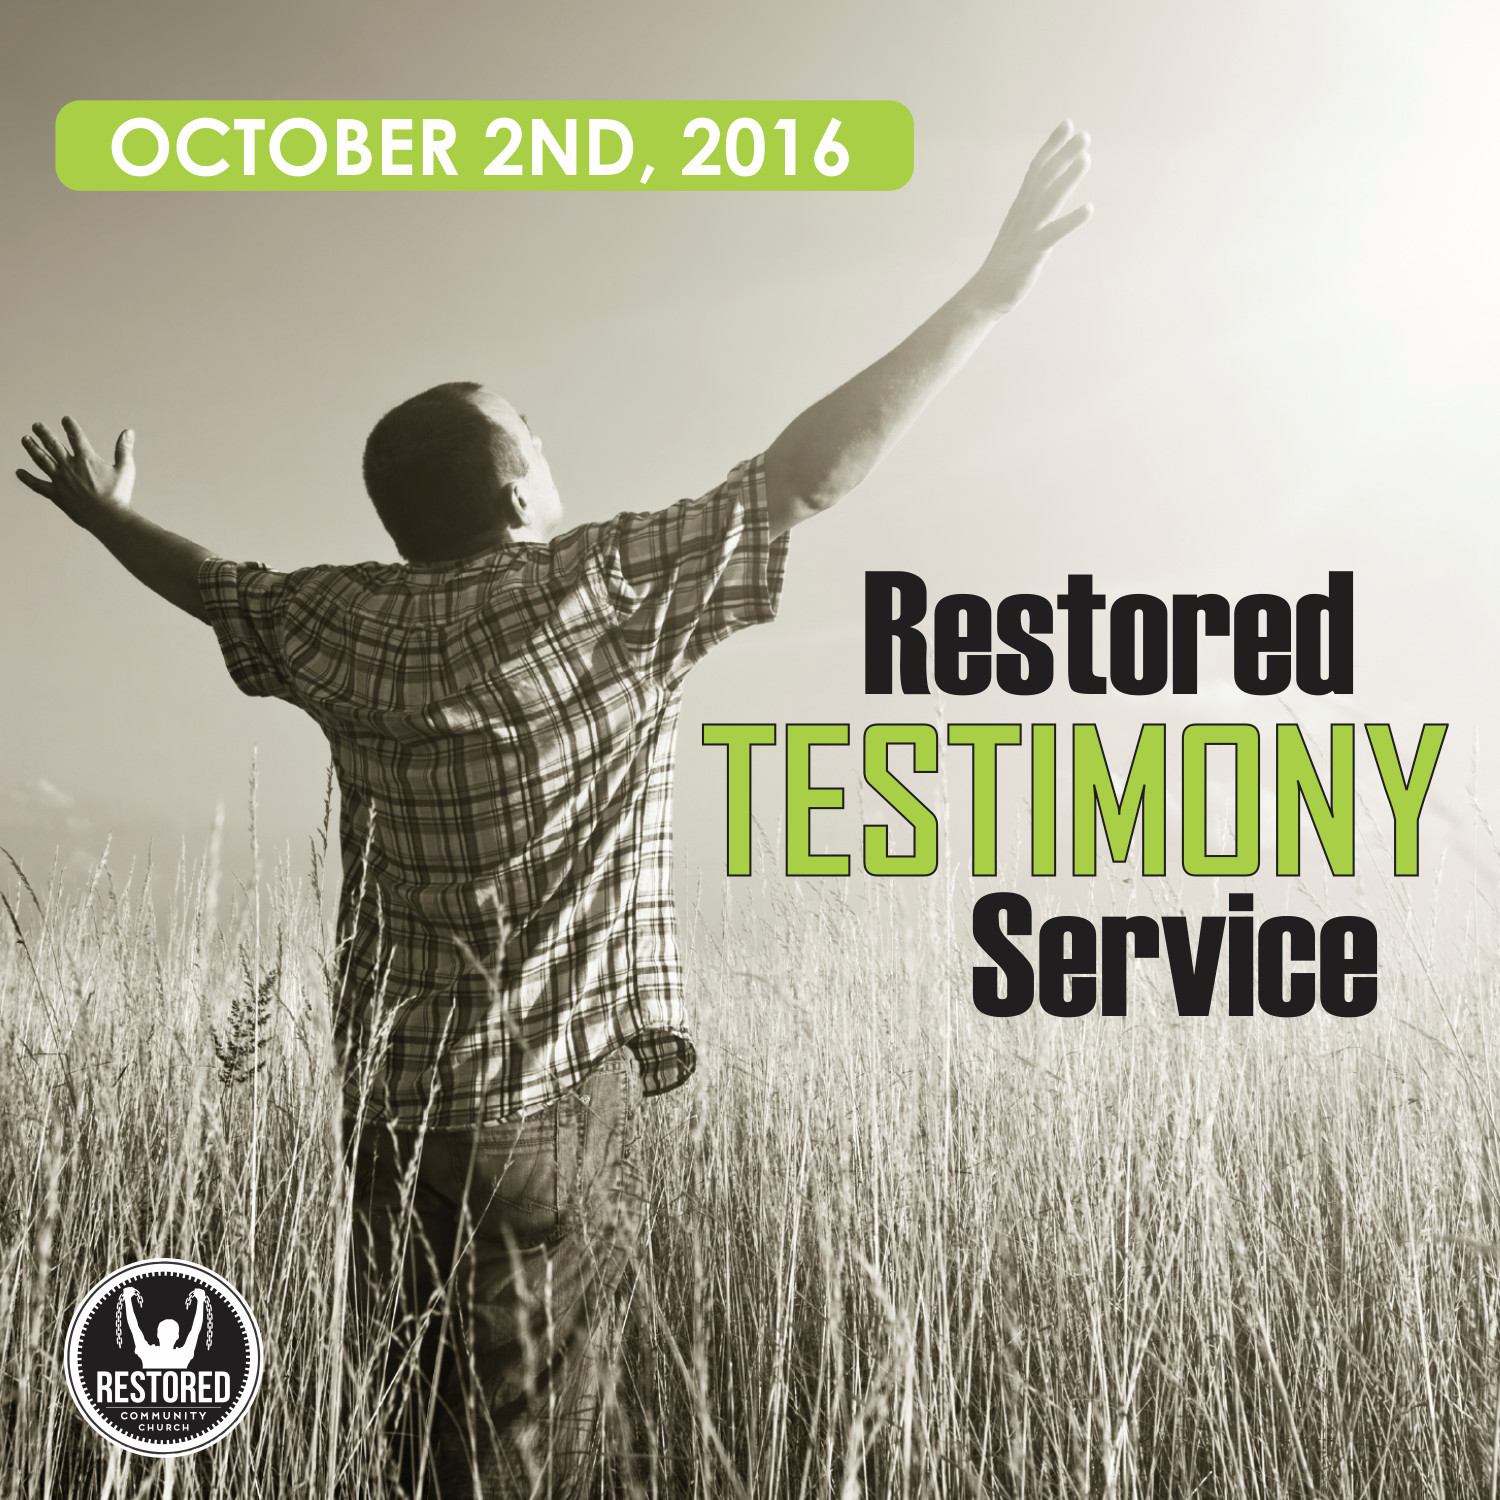 Testimony Sunday: October 2nd, 2016